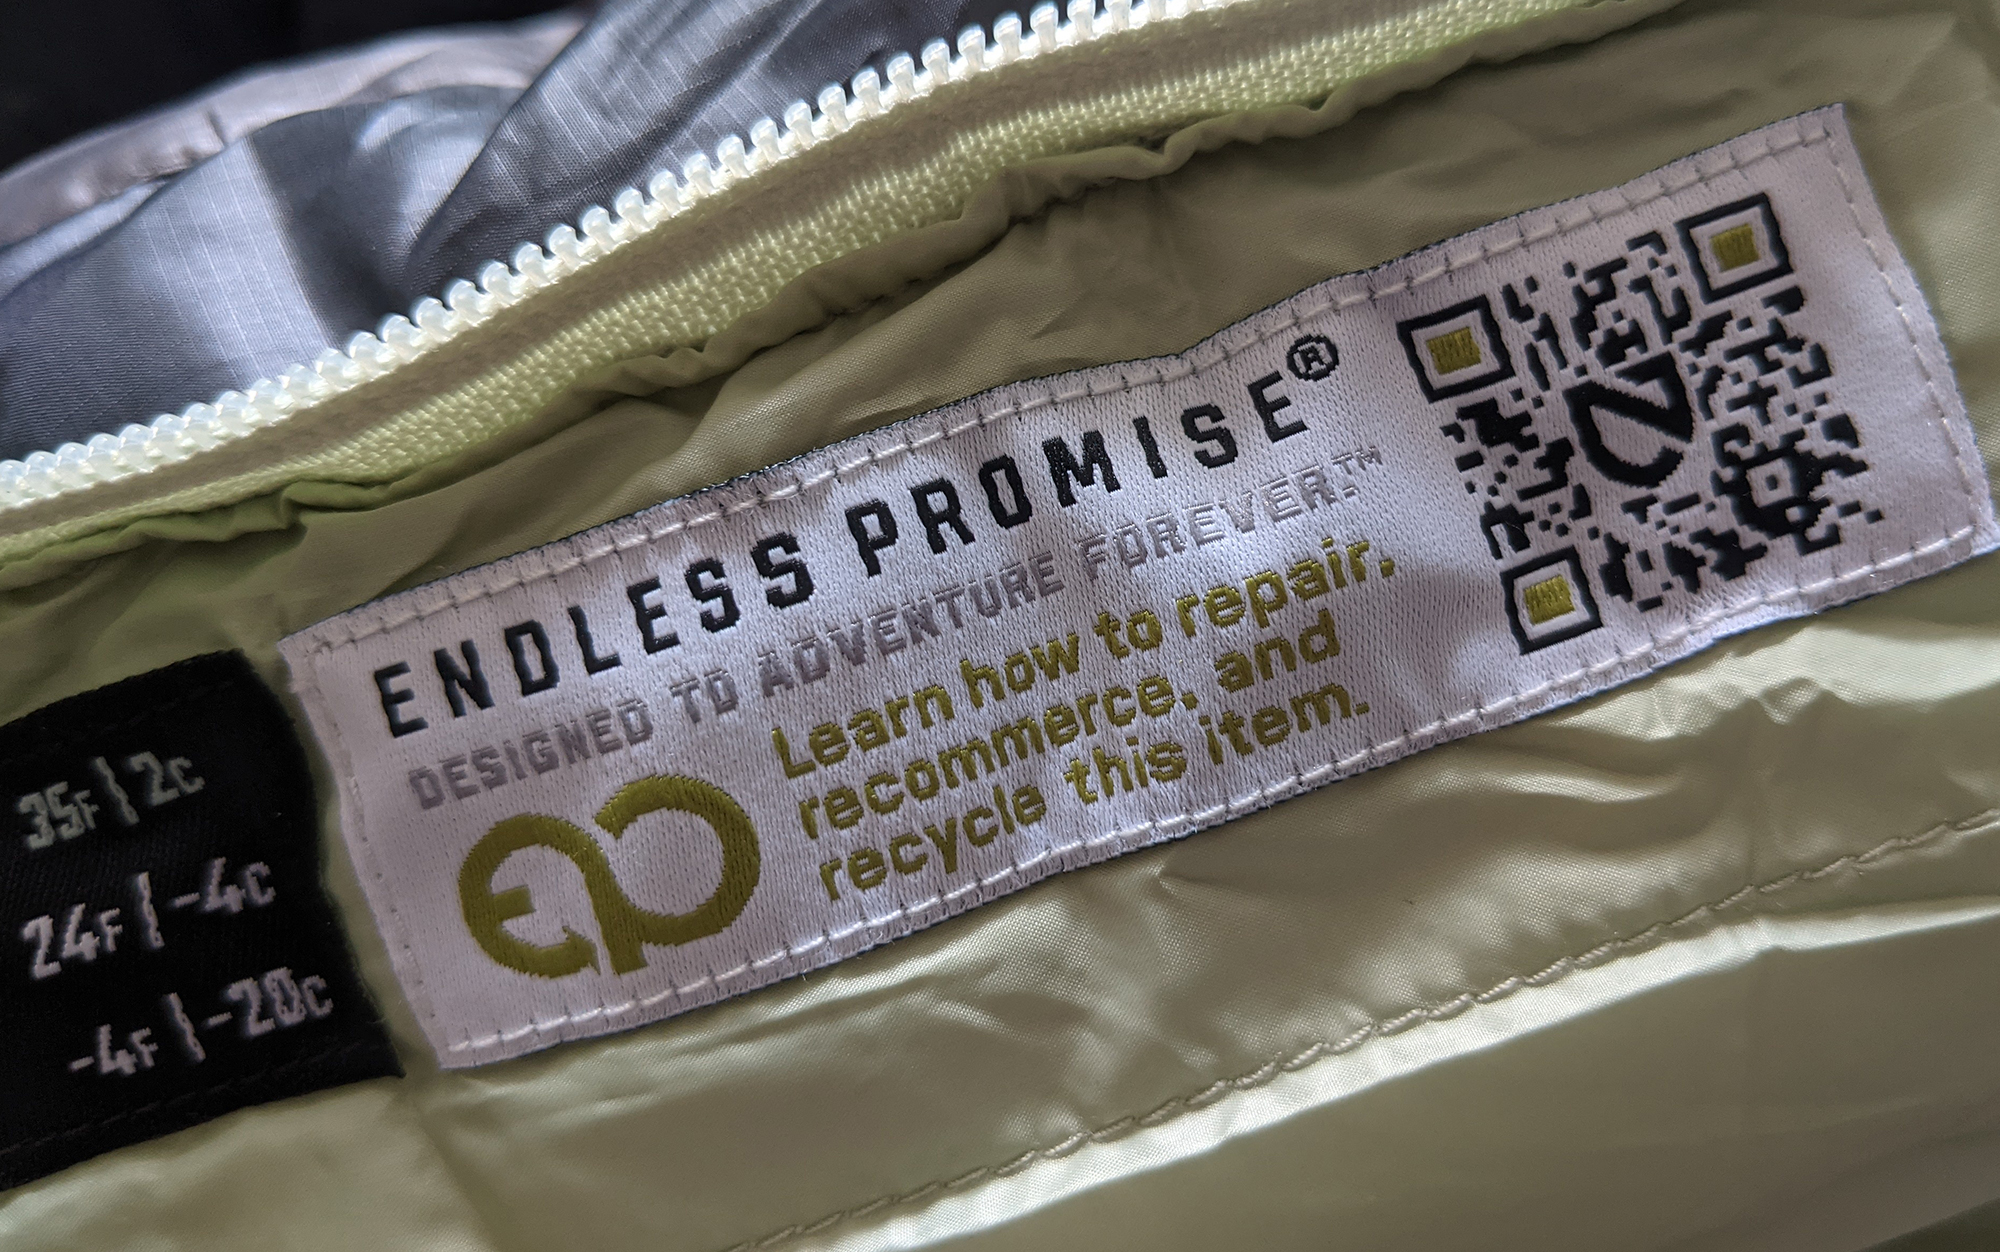 Nemoâs Forte sleeping bag can be fully recycledâone of the first synthetic sleeping bags where this is possible. 